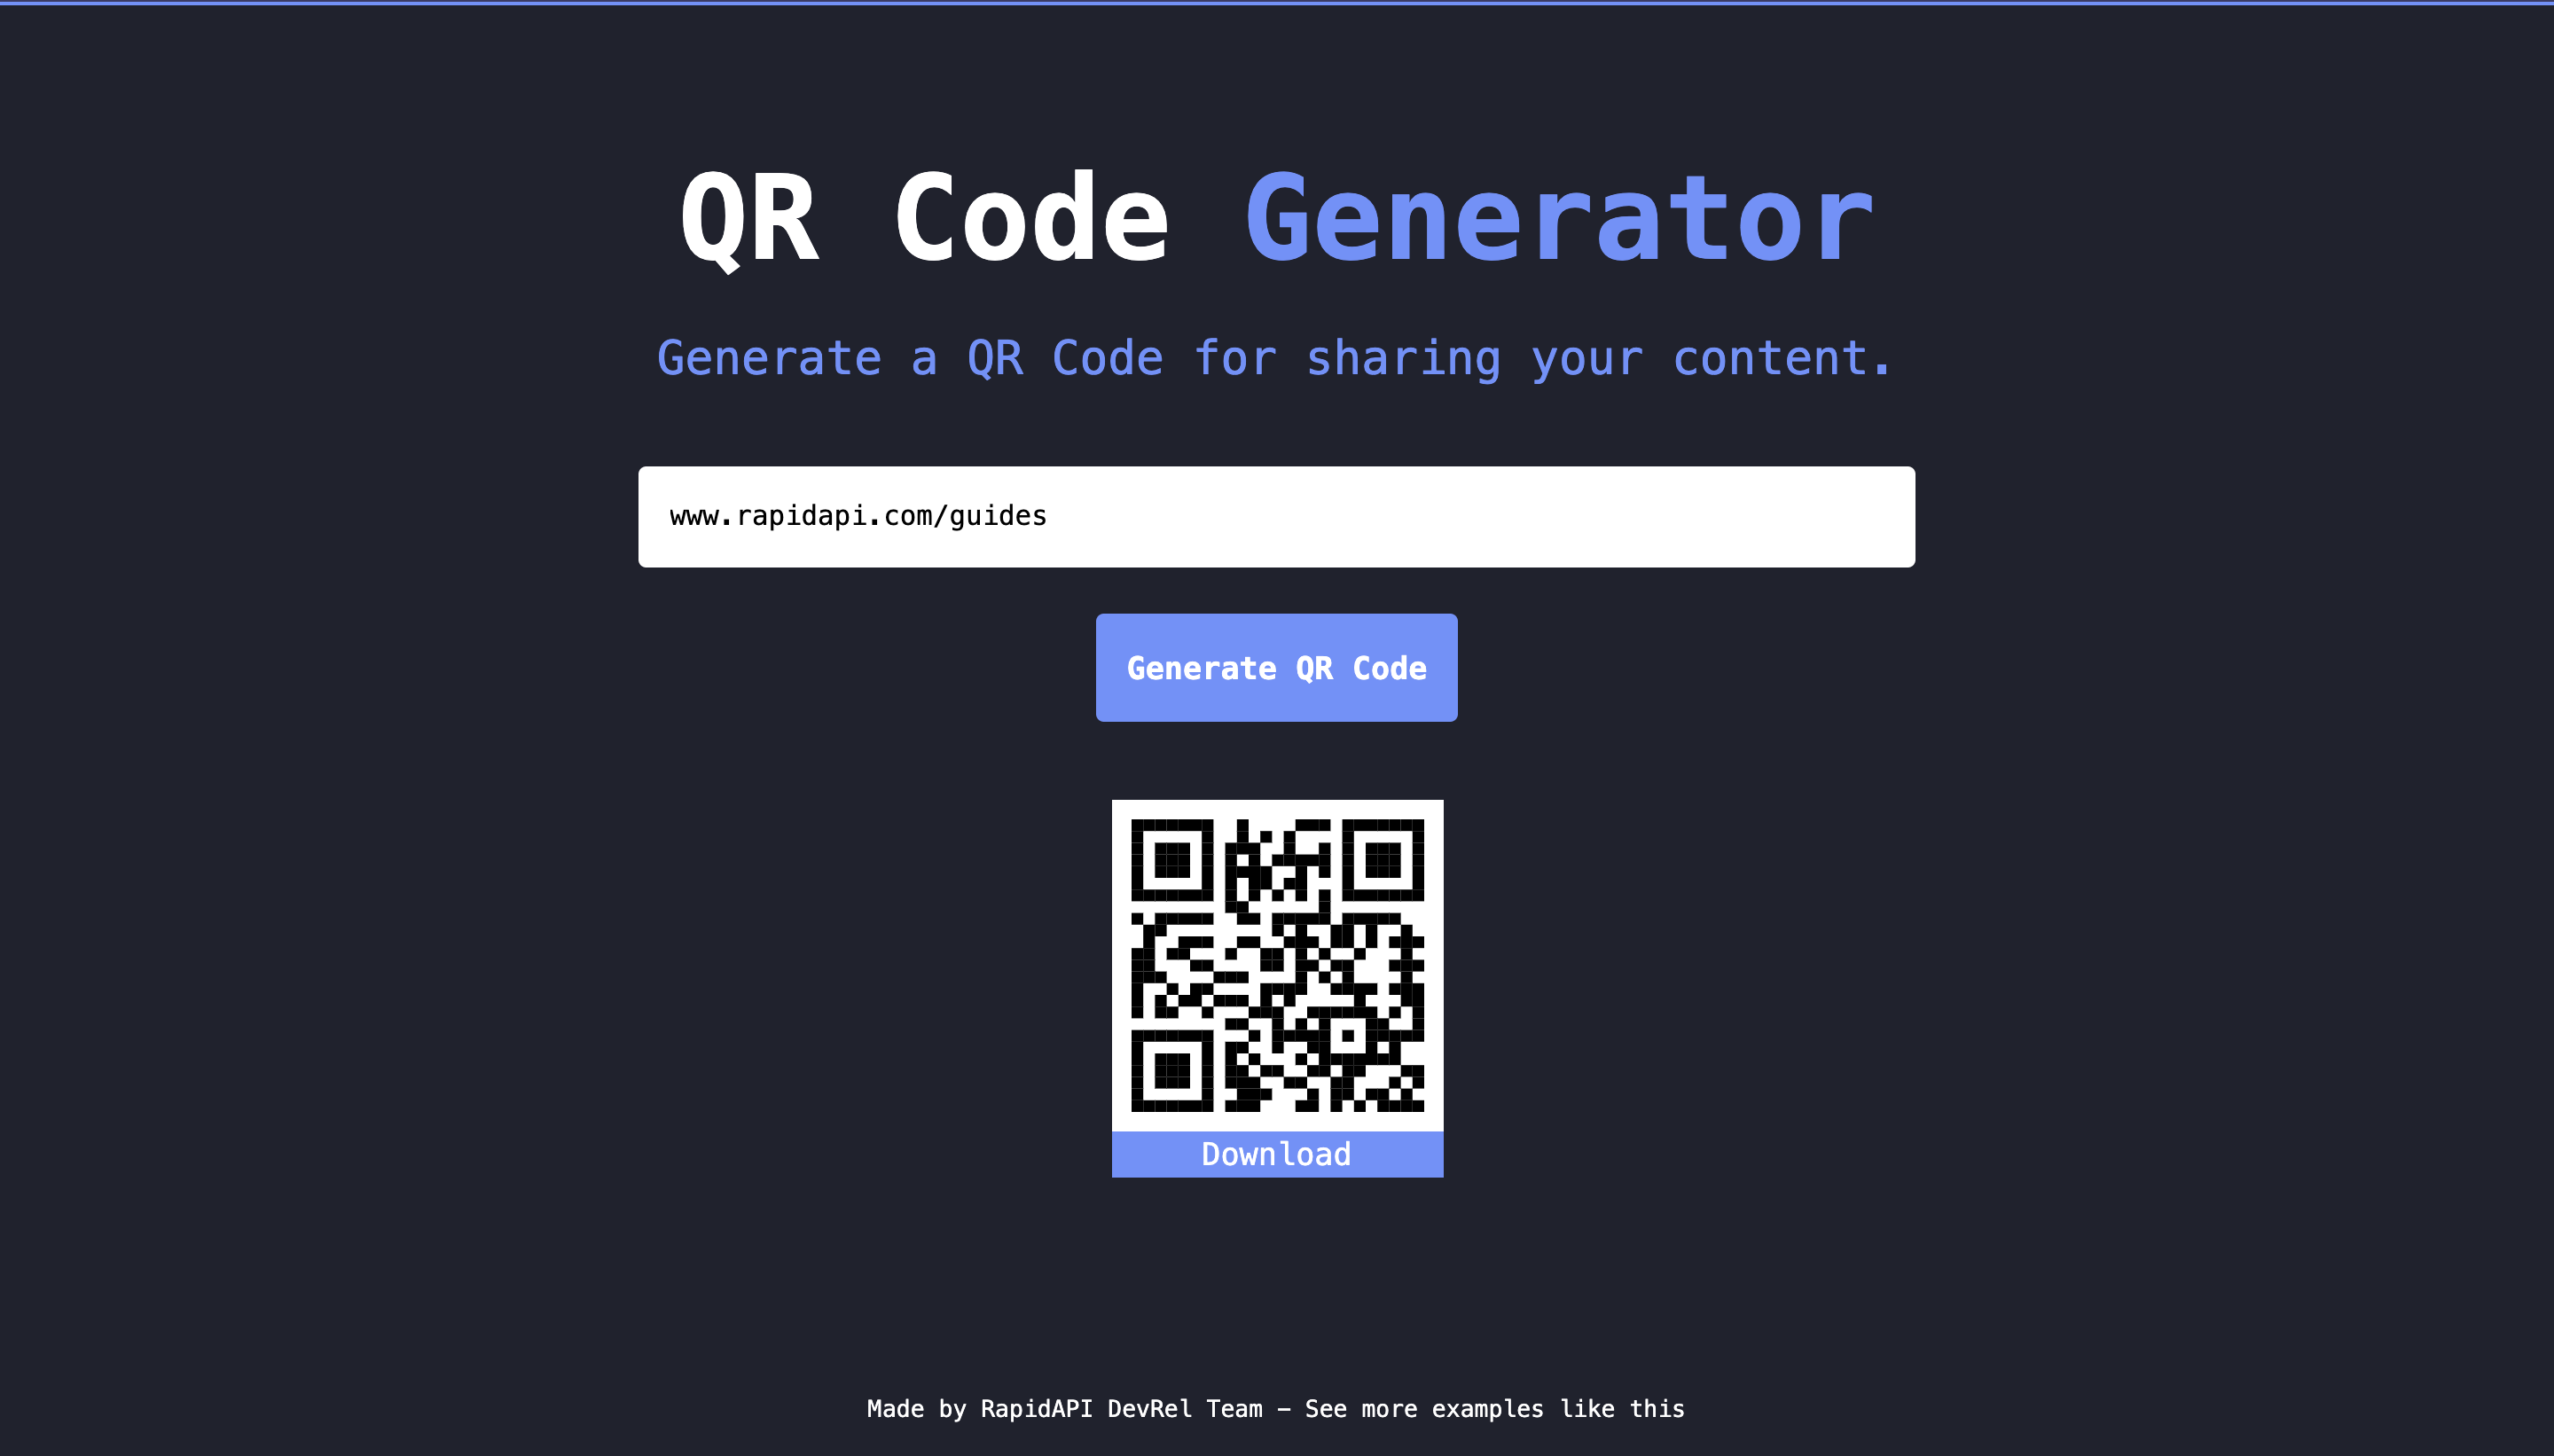 QR Code Generator built with Next.js and QRcode API